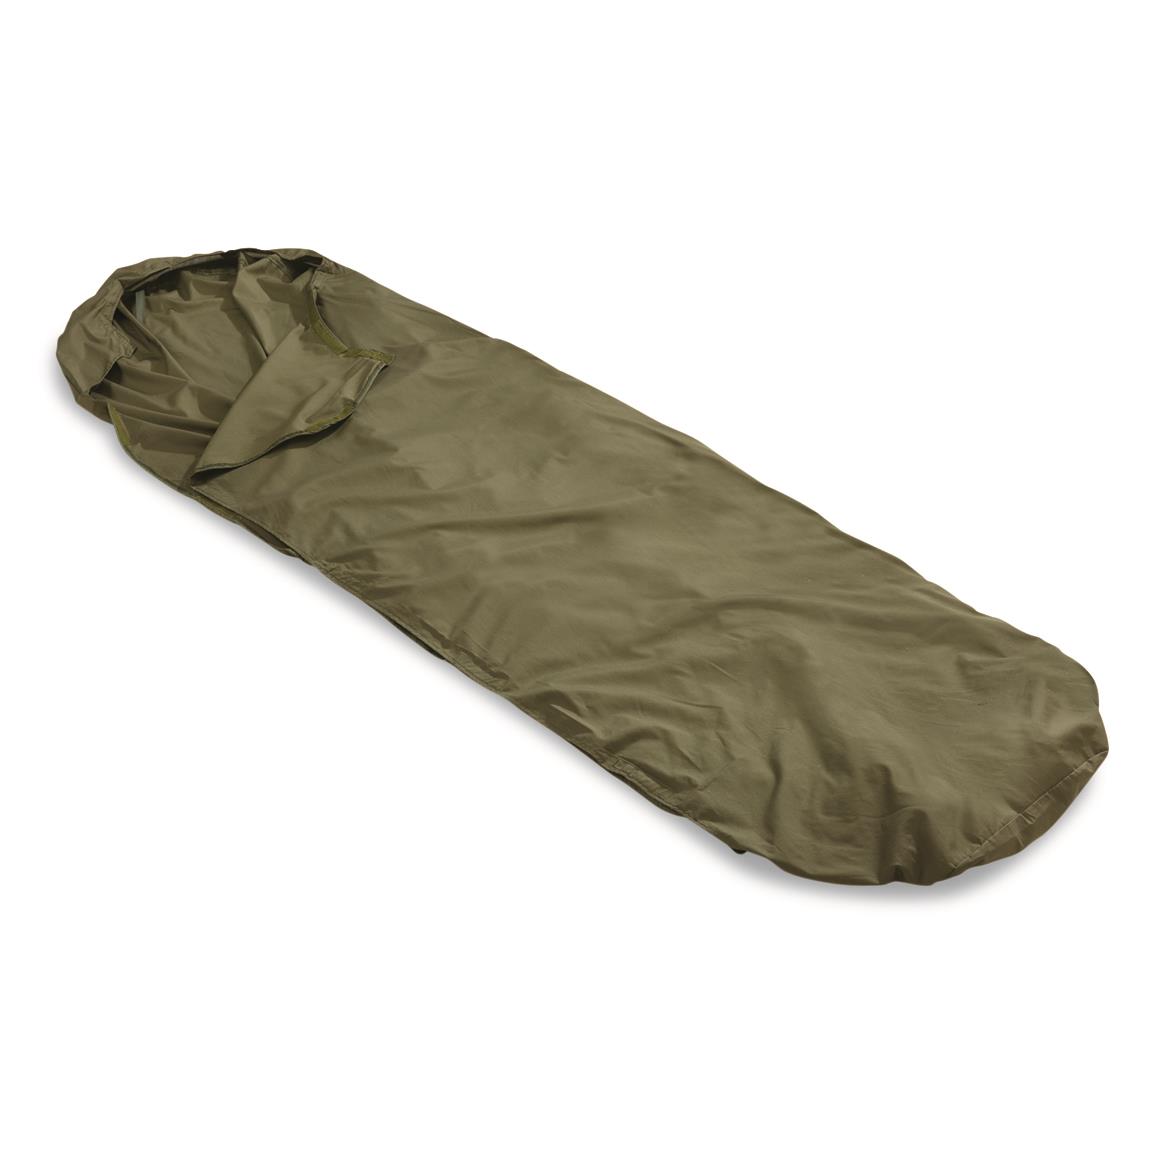 Belgian Military Surplus Cotton Sleeping Bag Insert, 4 Pack, Used